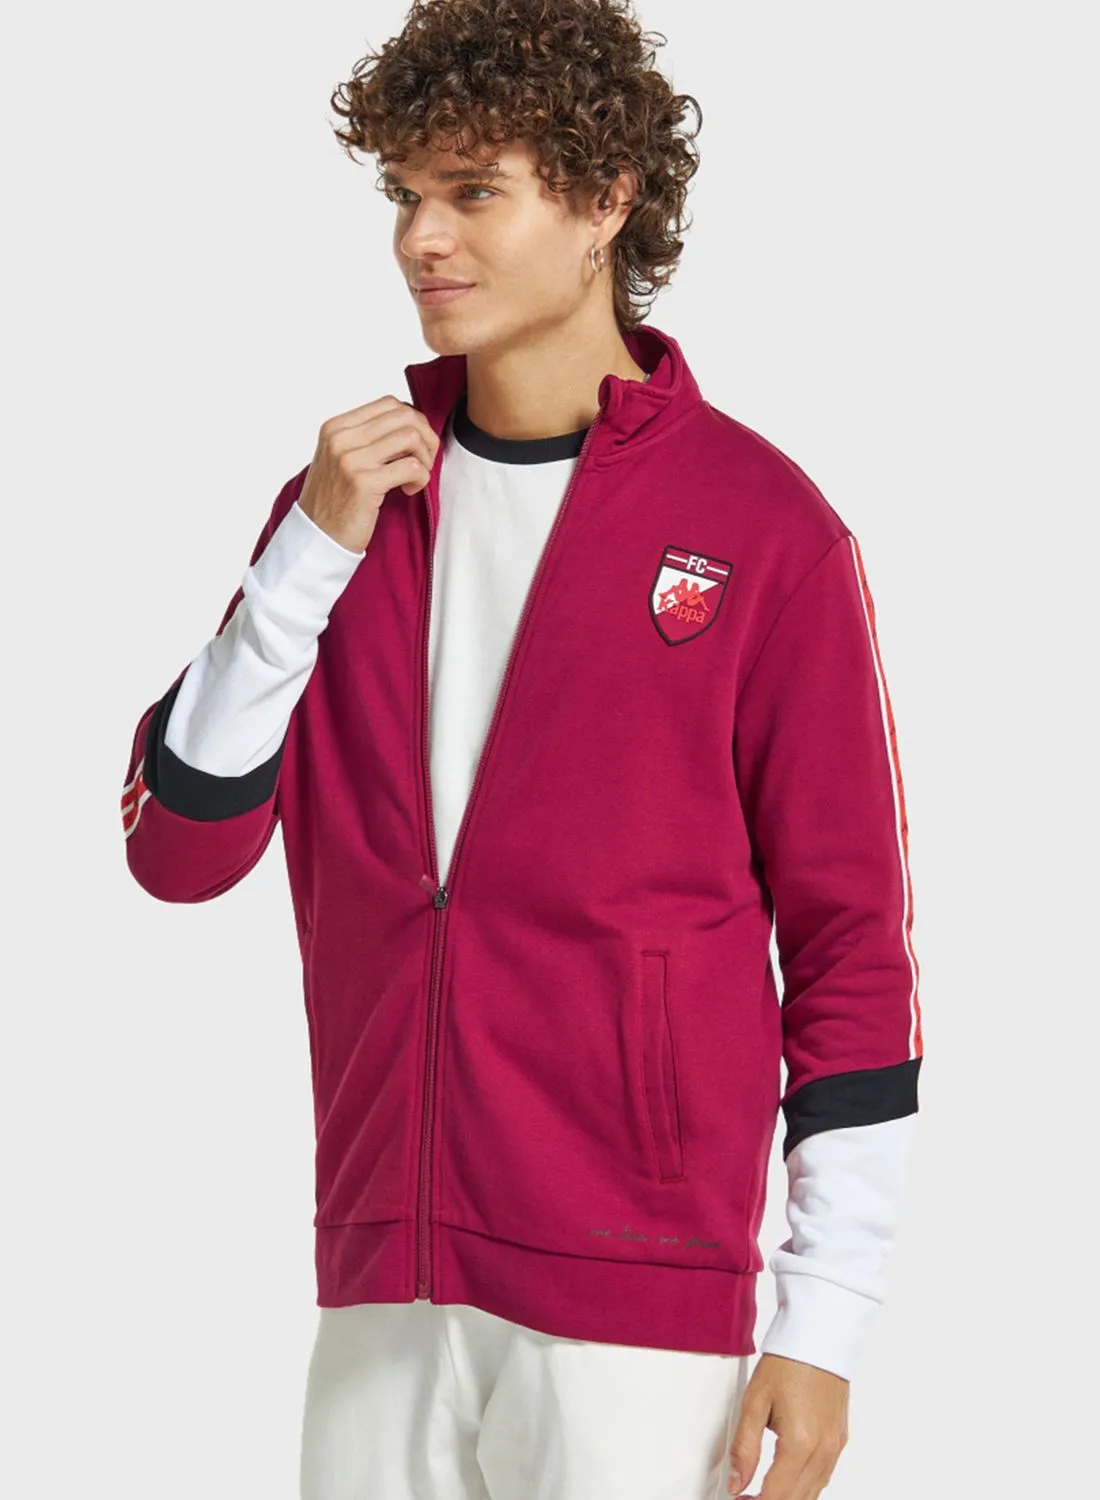 Kappa Qatar Jacket